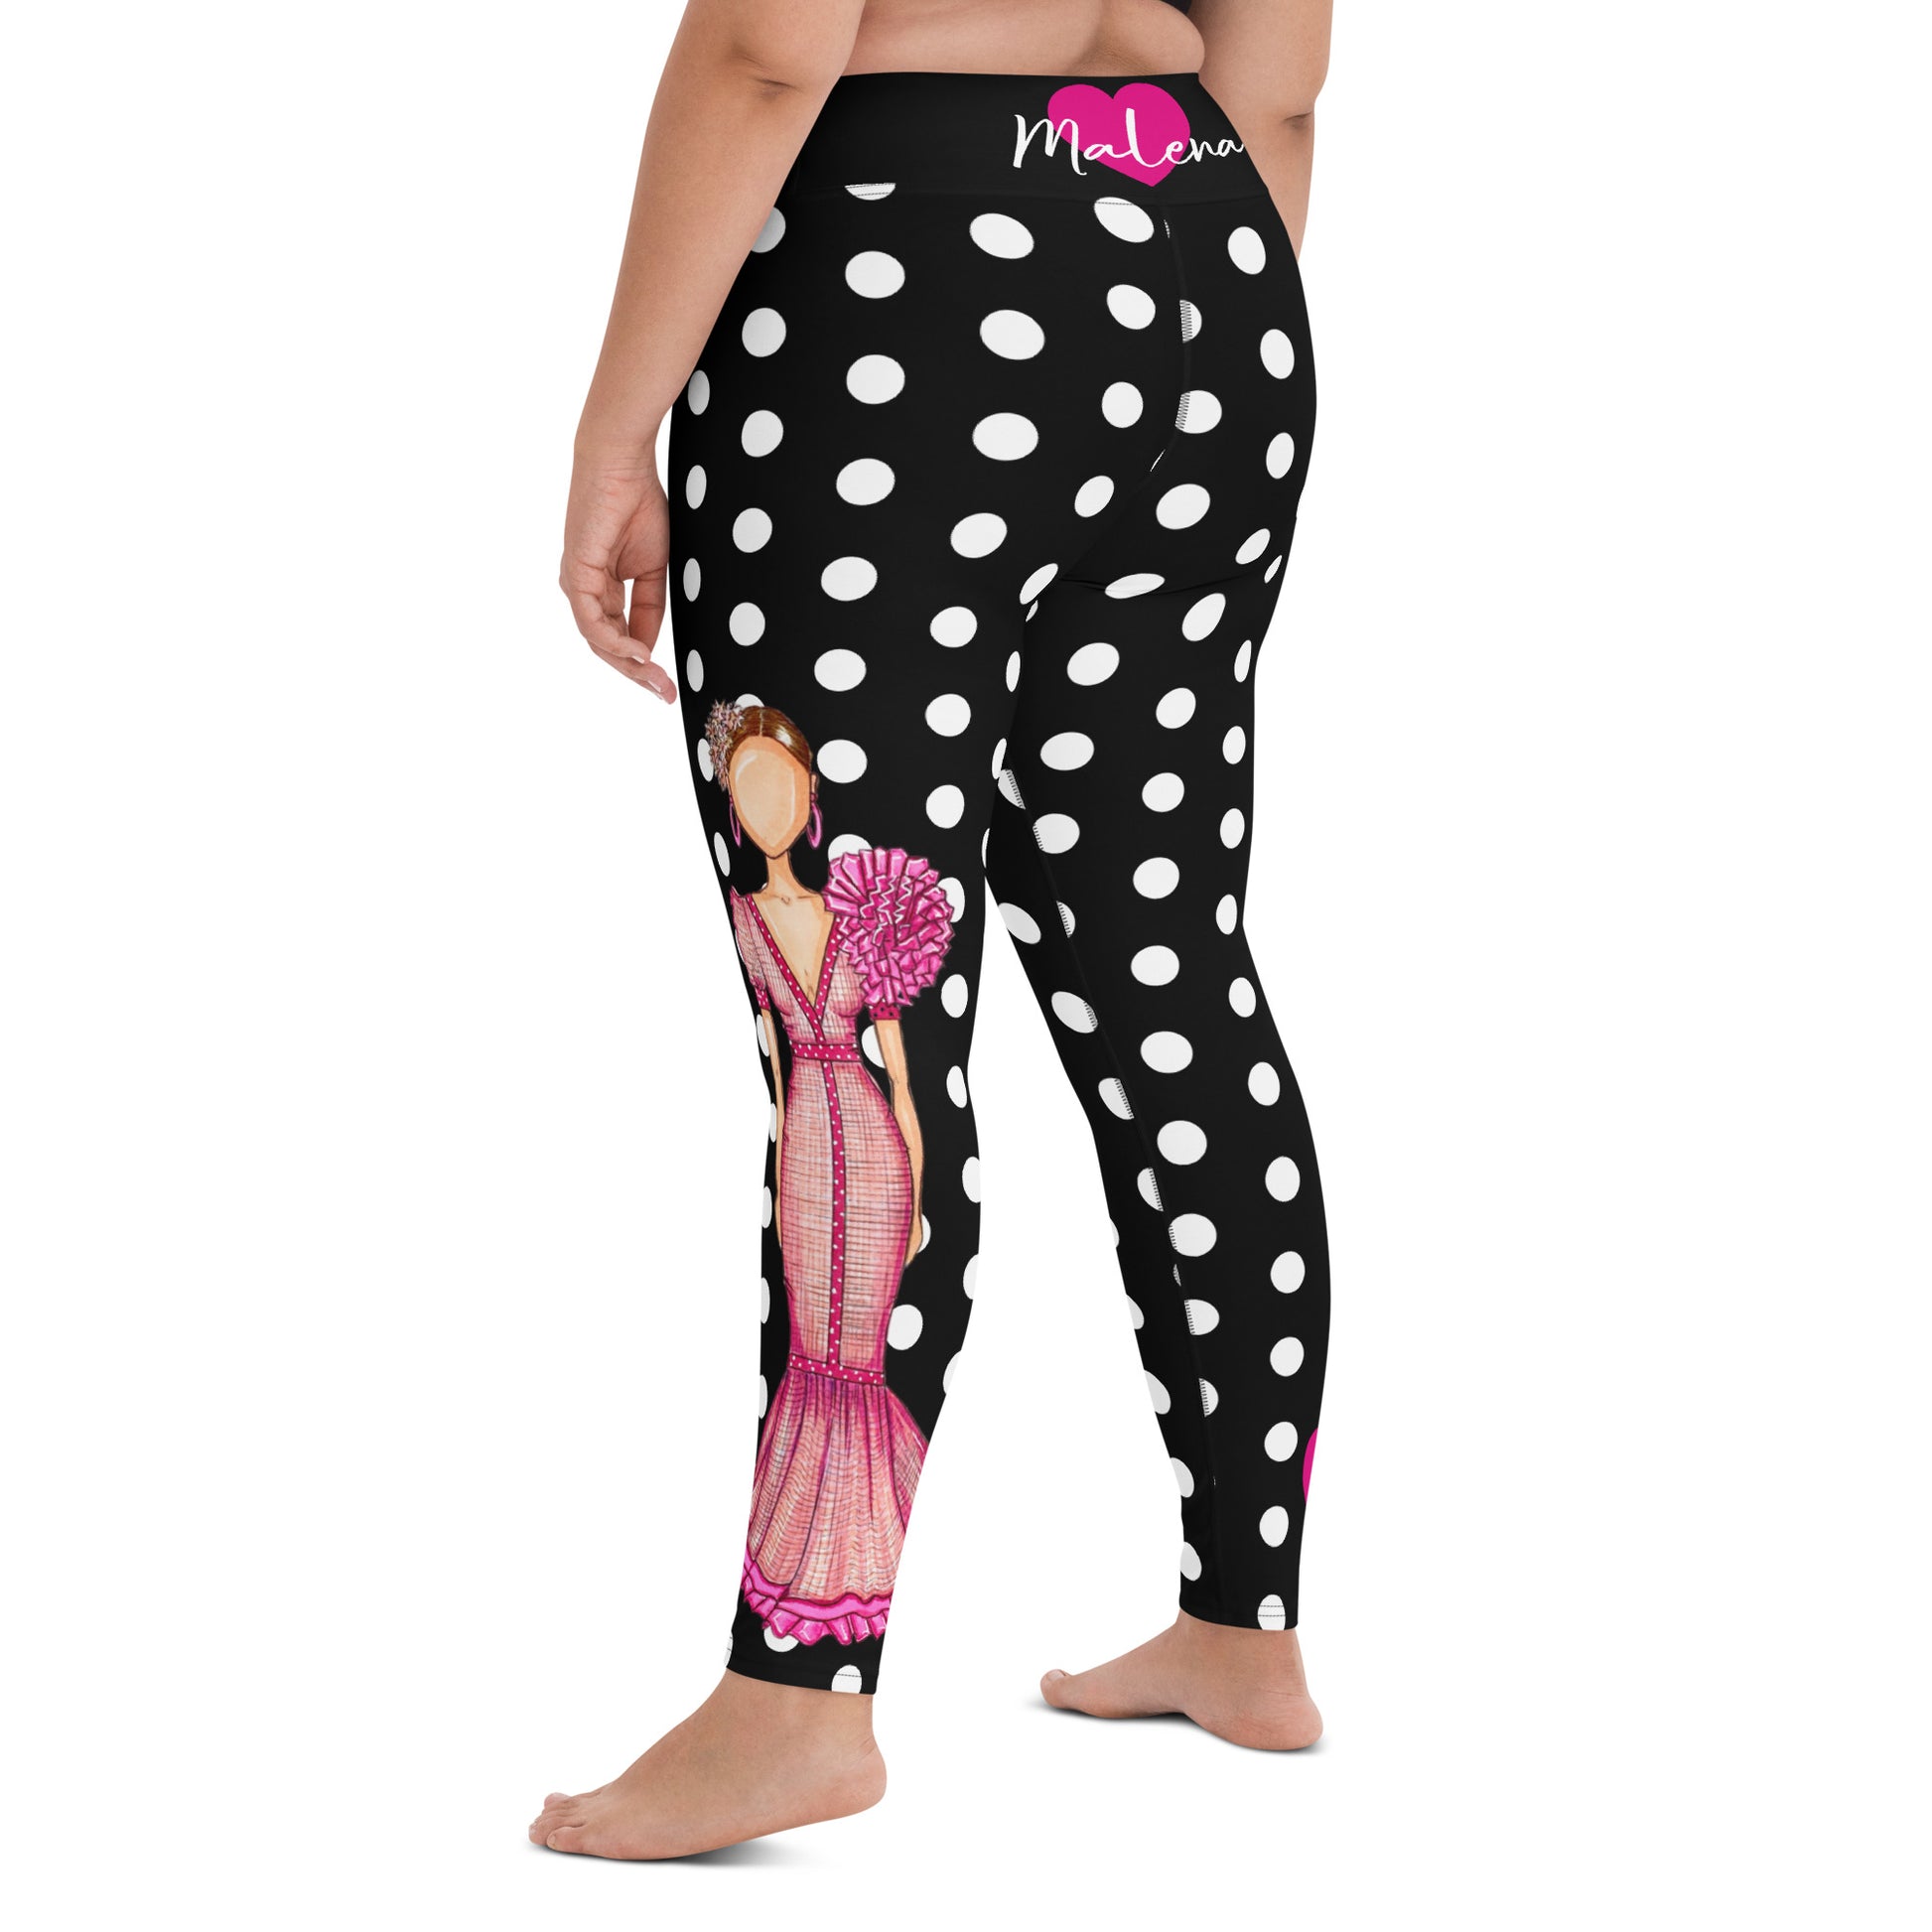 Flamenco Dancer Leggings, black with white polka dots high waisted yoga leggings with a pink dress design - IllustrArte